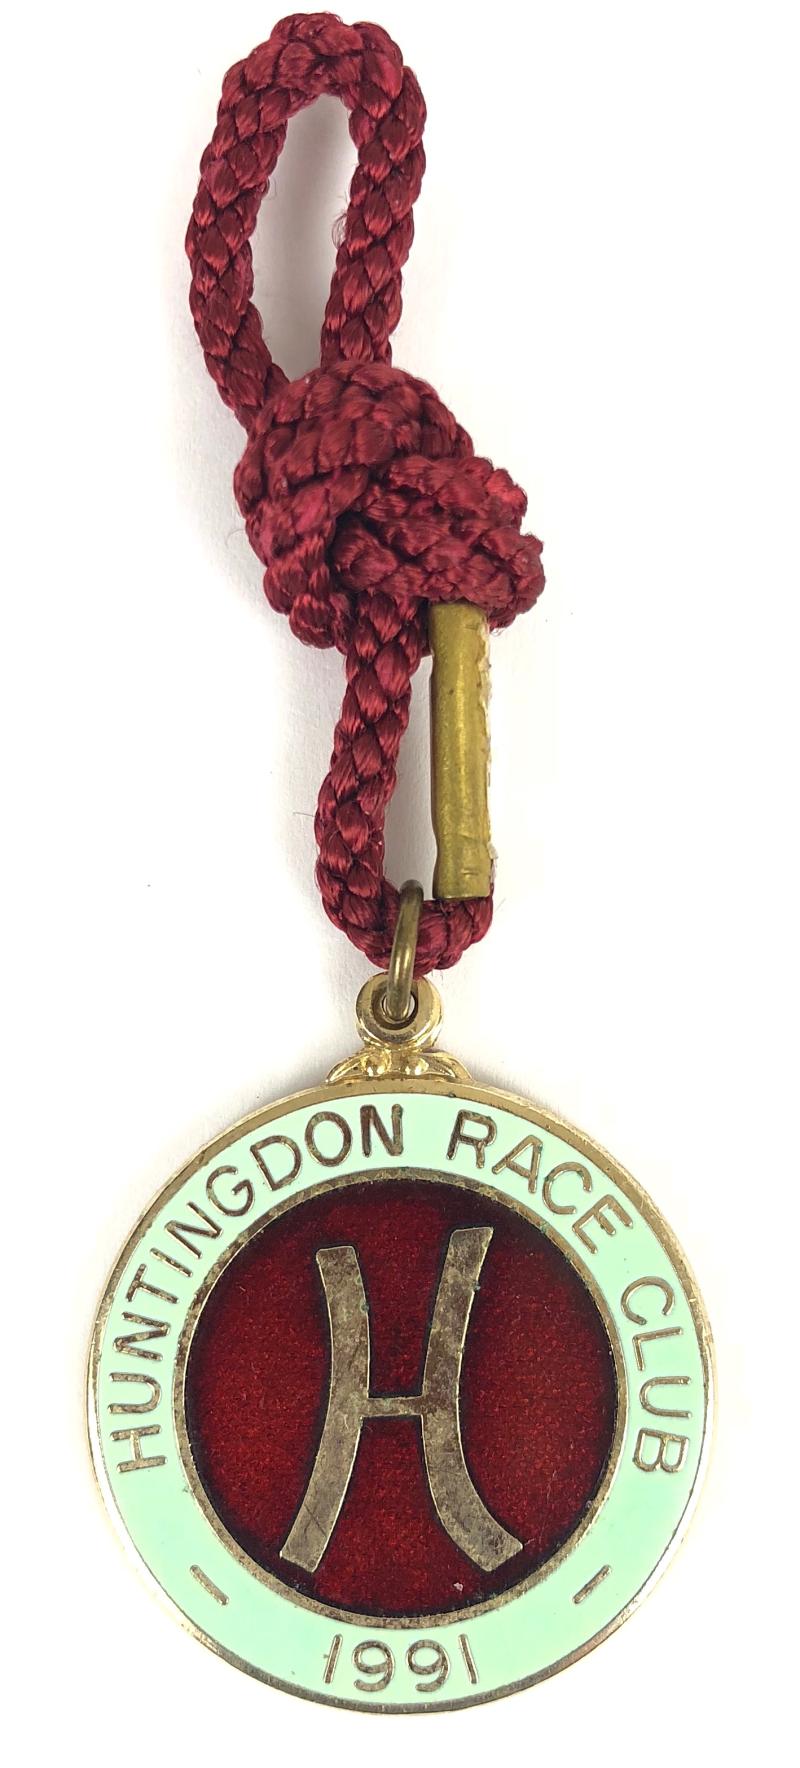 1991 Huntingdon Racecourse horse racing club badge